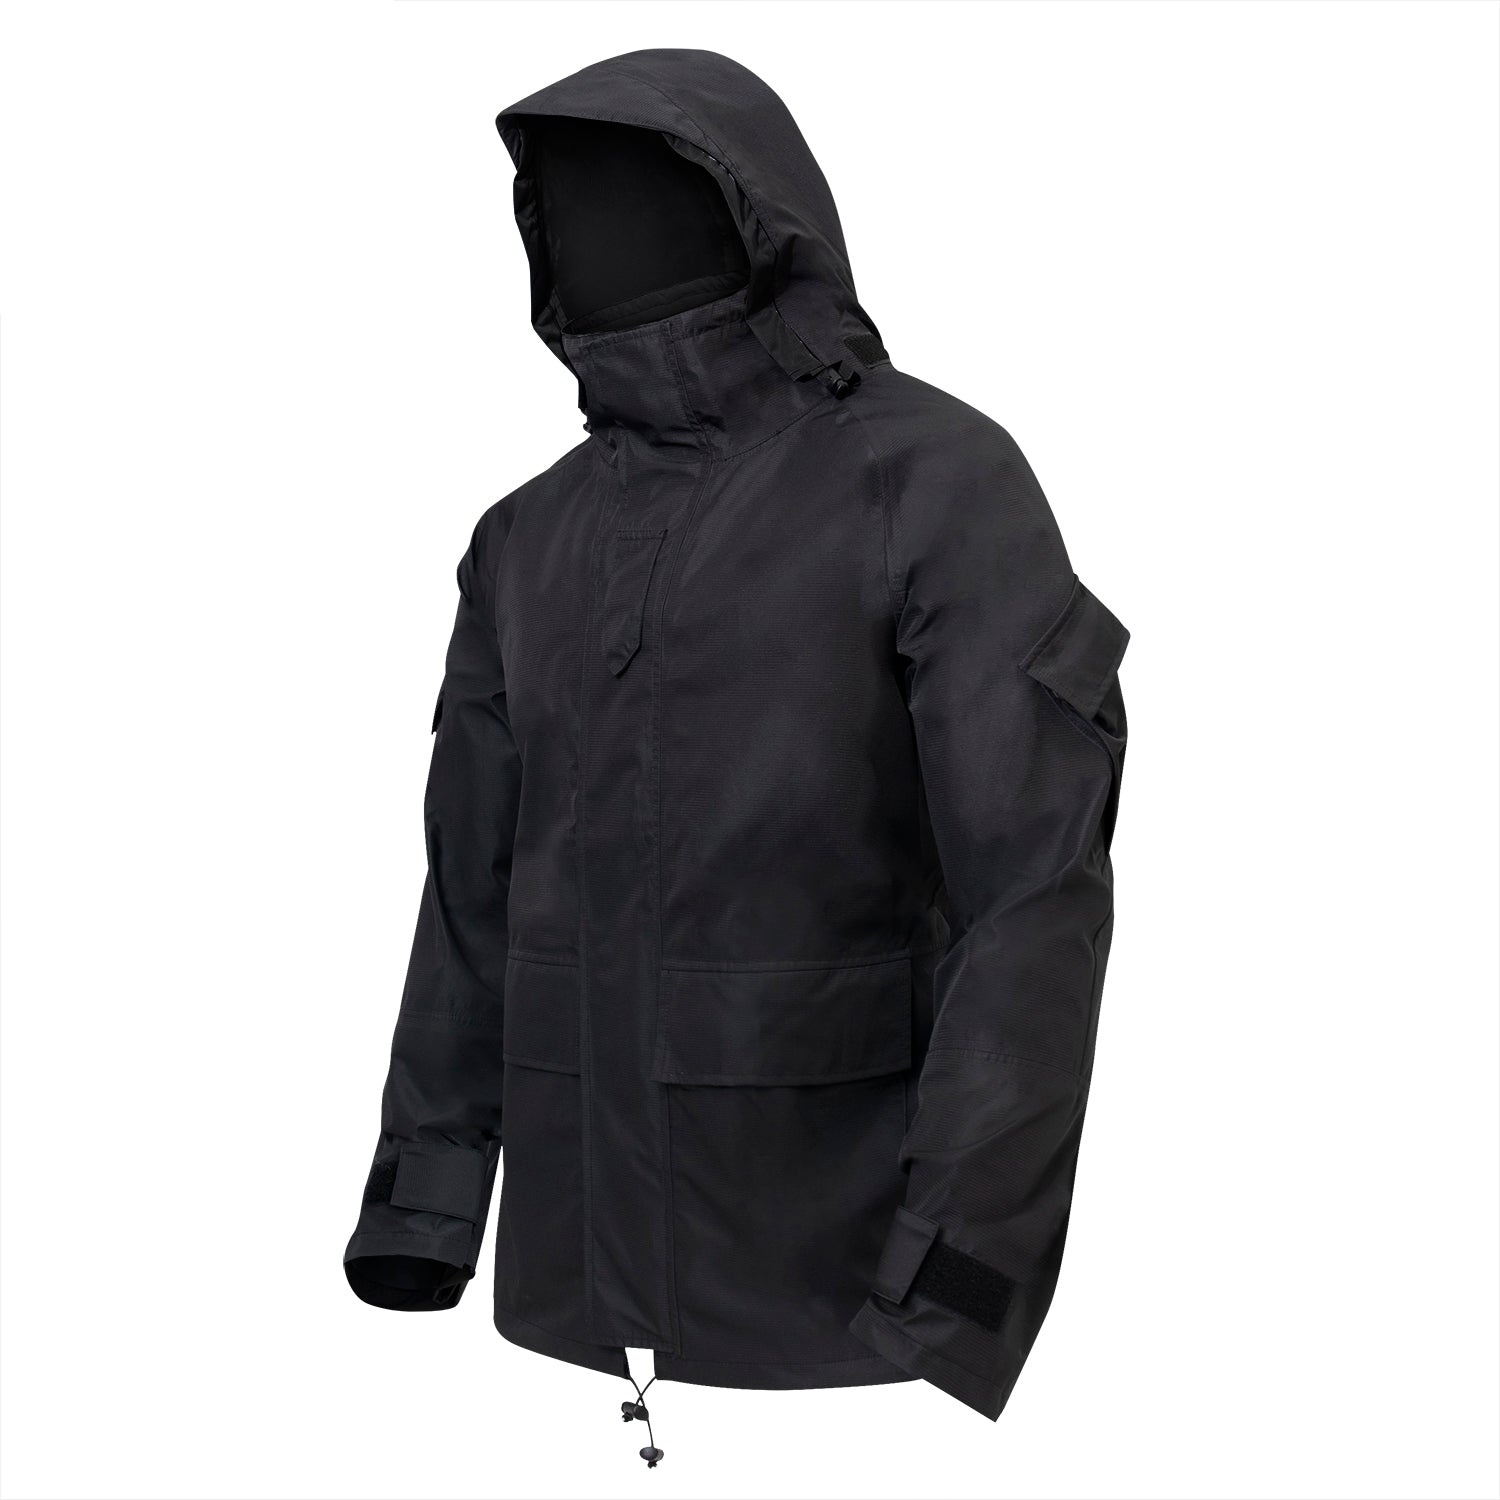 MilSpec Tactical Hard Shell Waterproof Jacket - Black Outerwear MilSpec Tactical Gear Supplier Tactical Distributors Australia